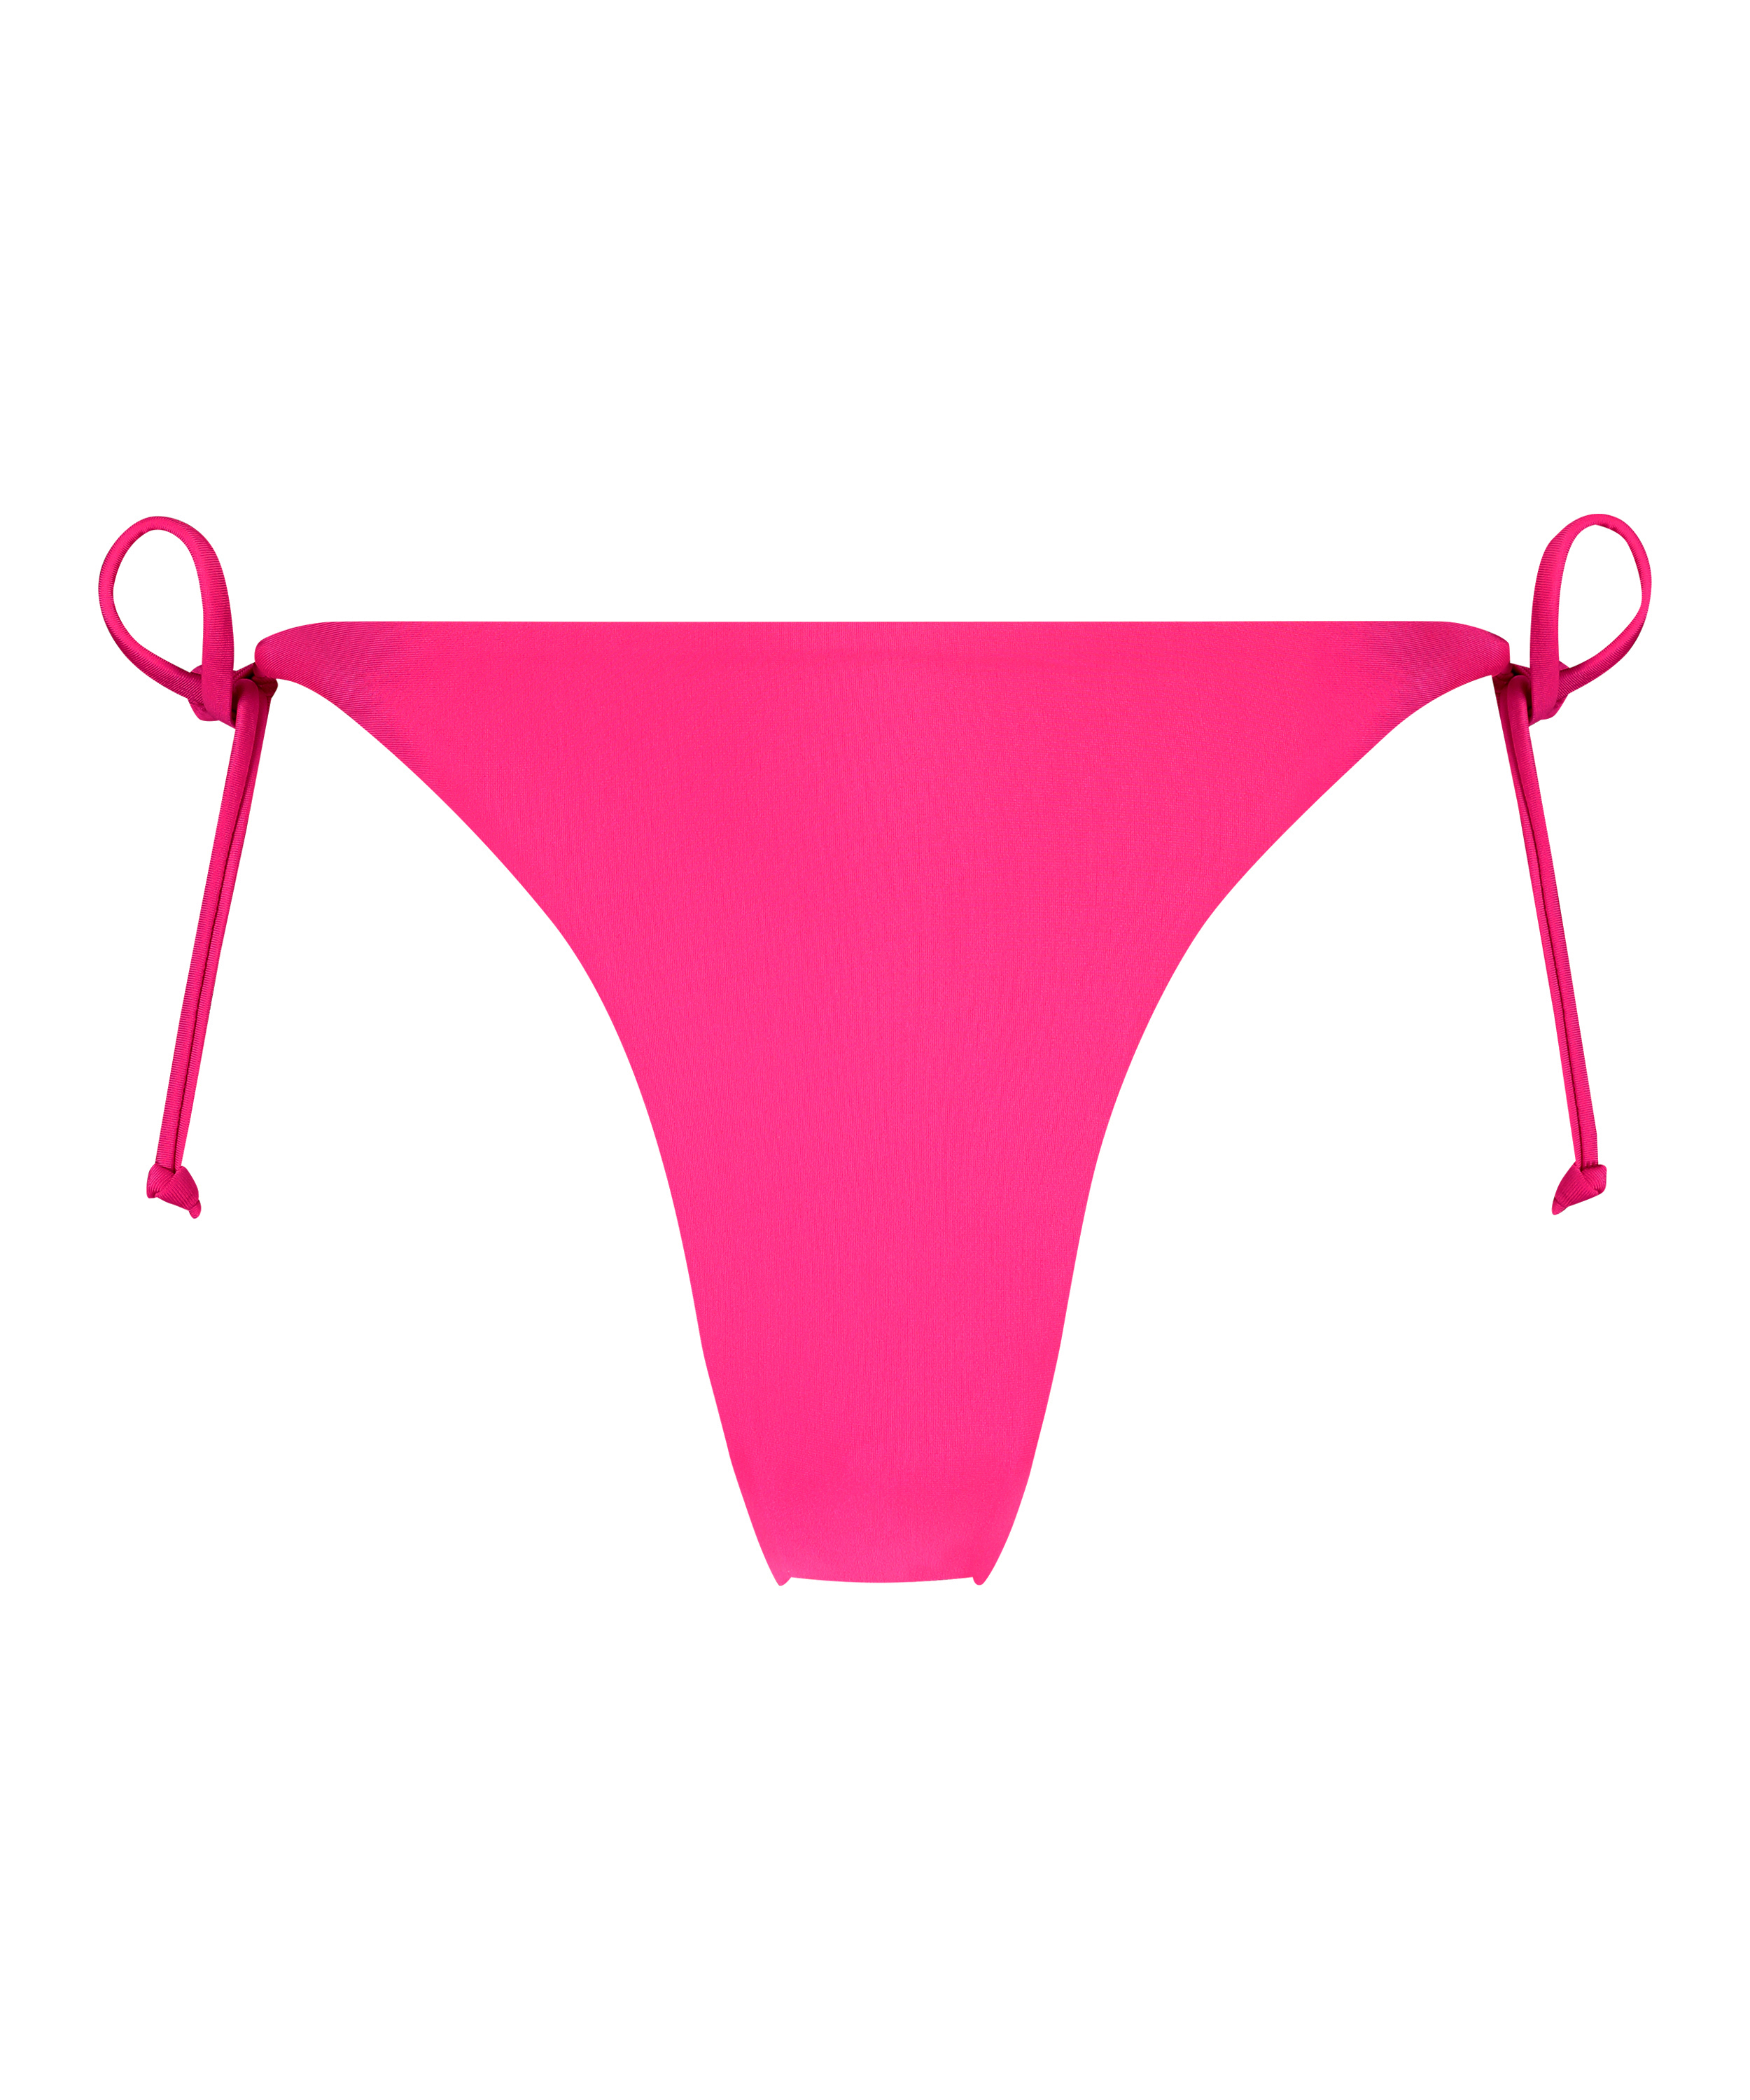 Naples Thong Bikini Bottoms, Pink, main